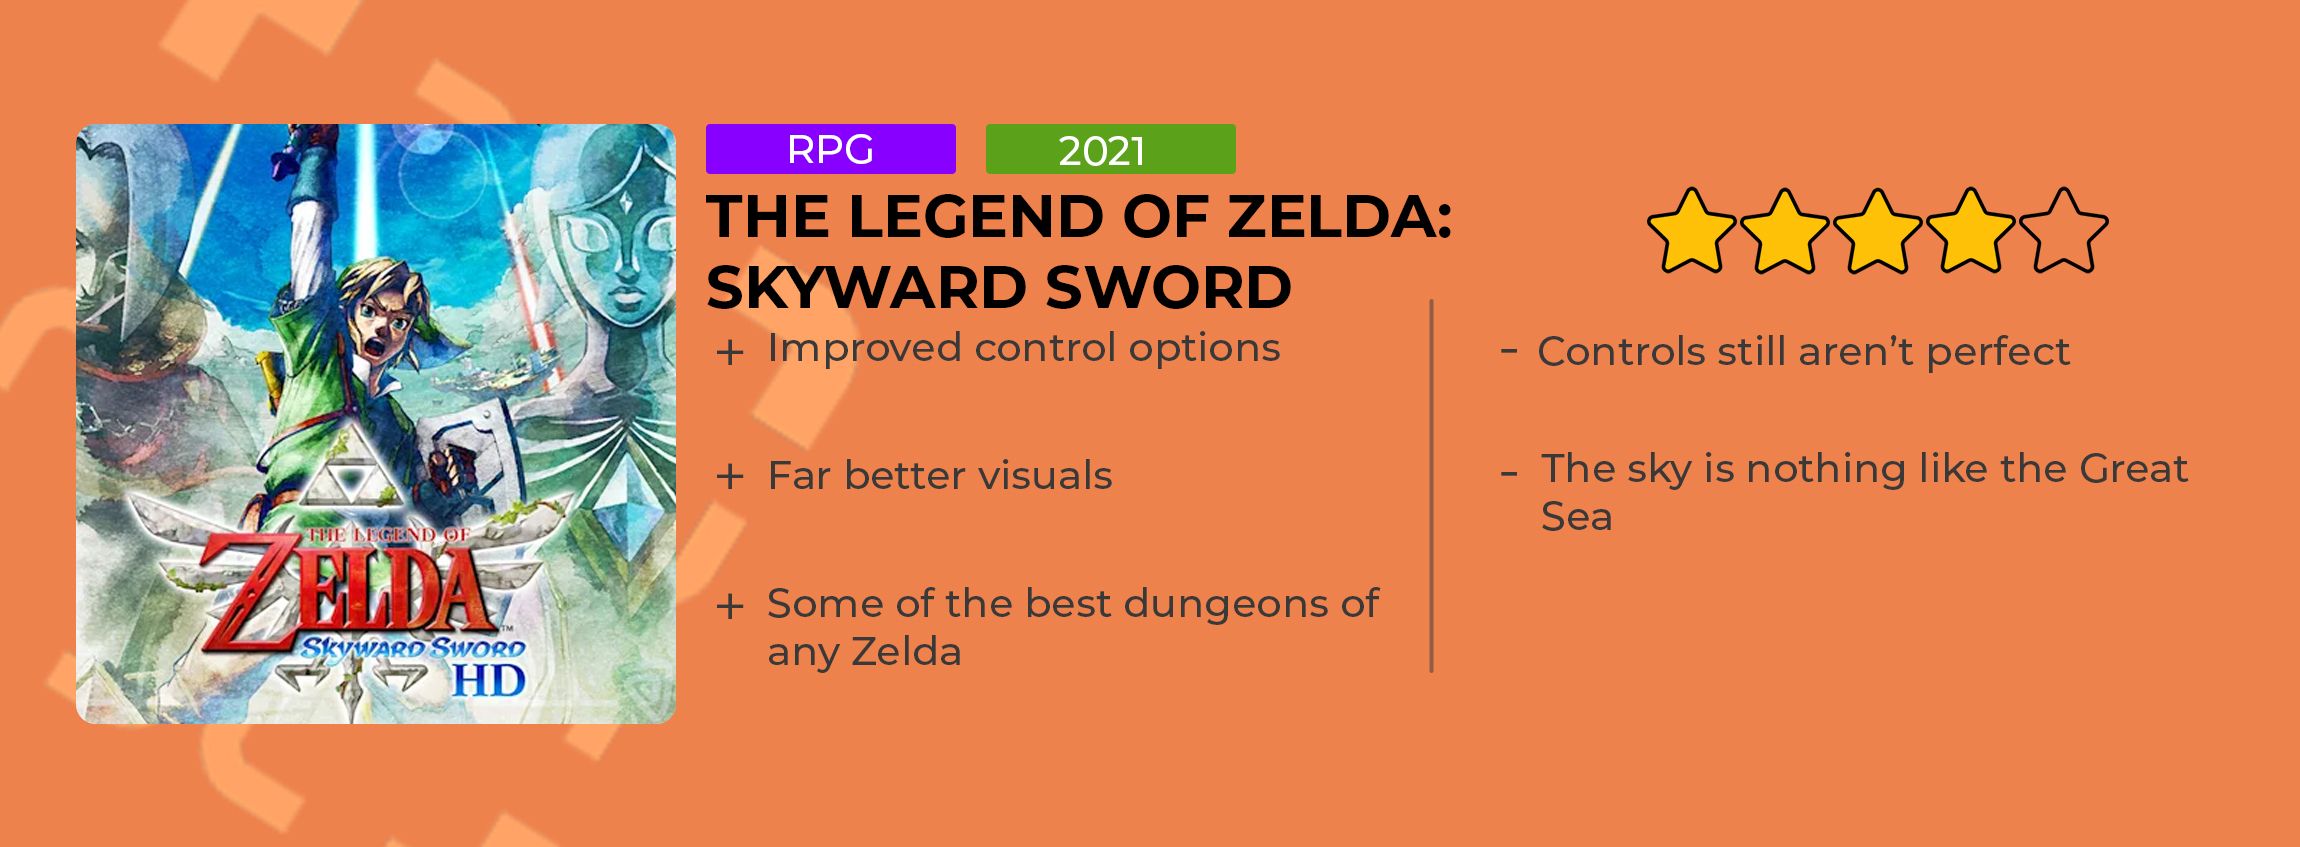 The Legend of Zelda Skyward Sword HD Review Score Card